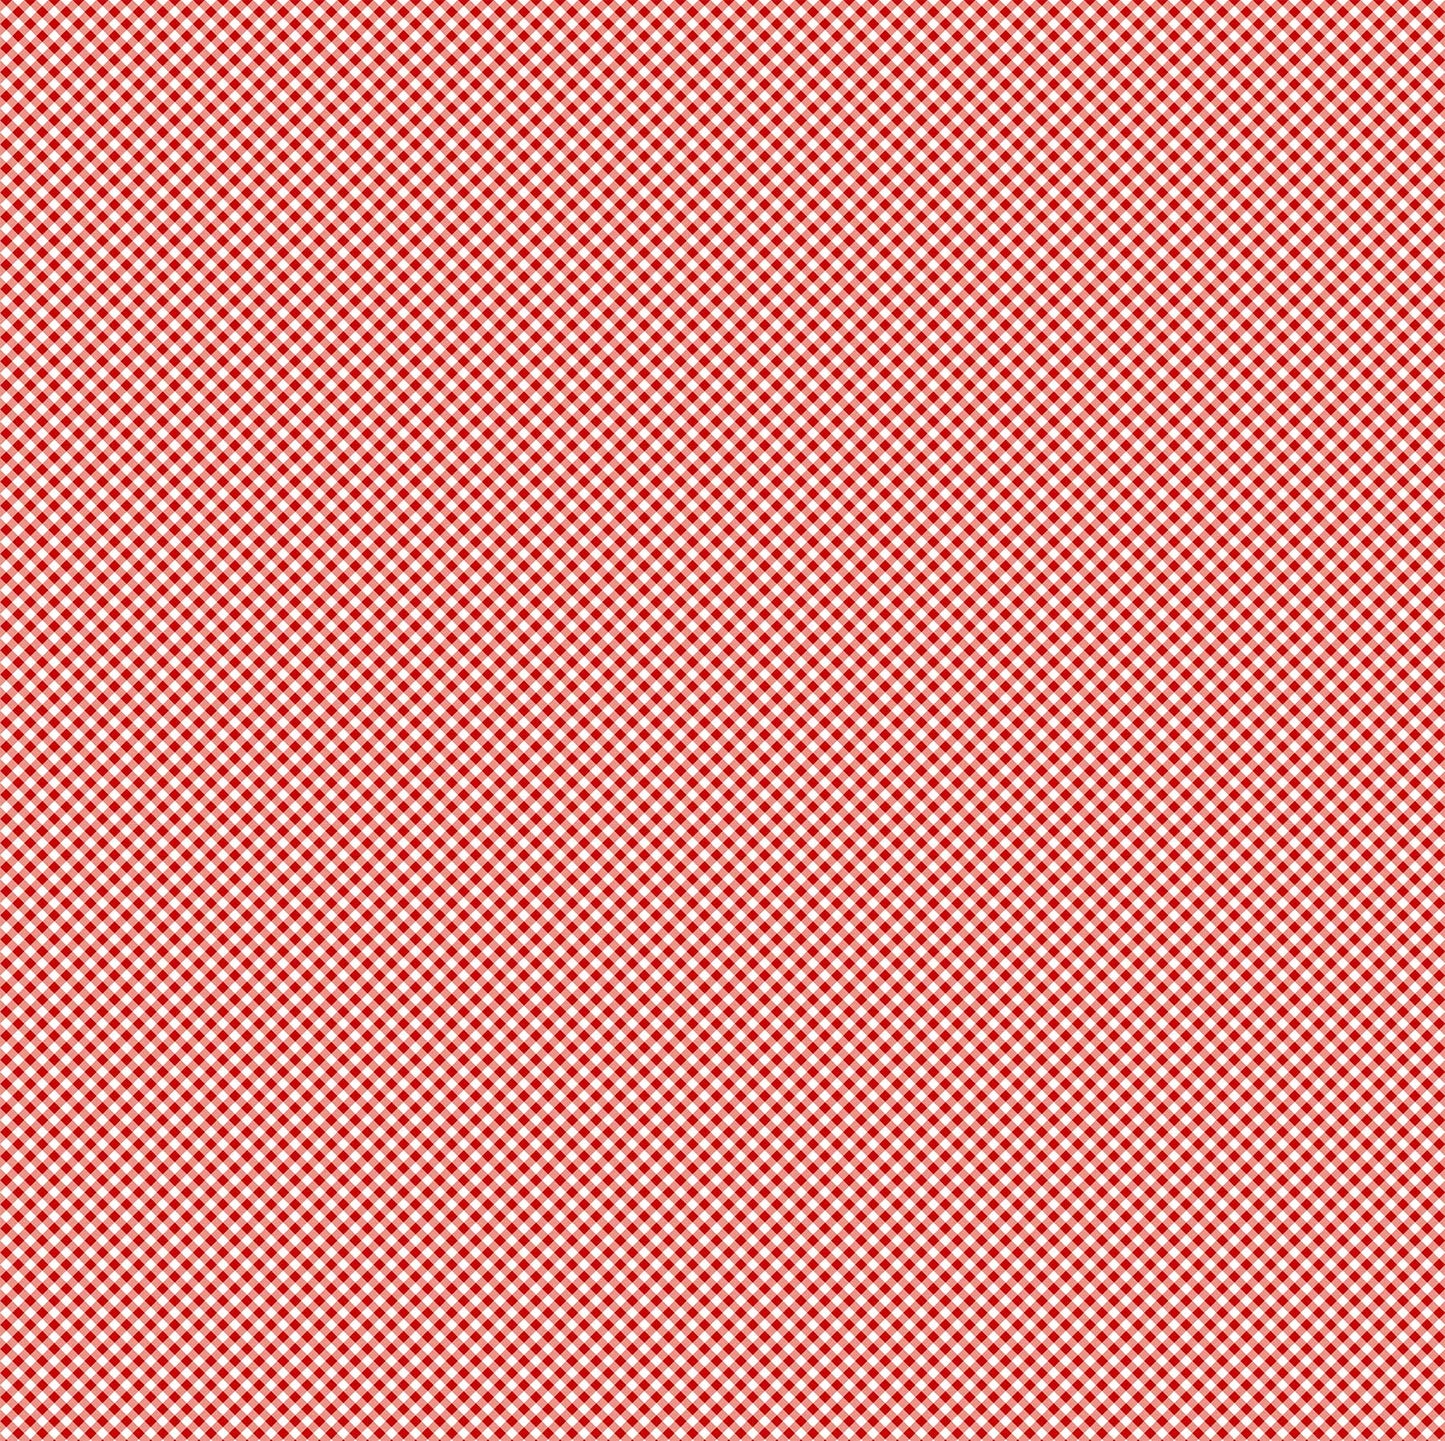 Smokin Hot Gingham Red    24810-24 Cotton Woven Fabric